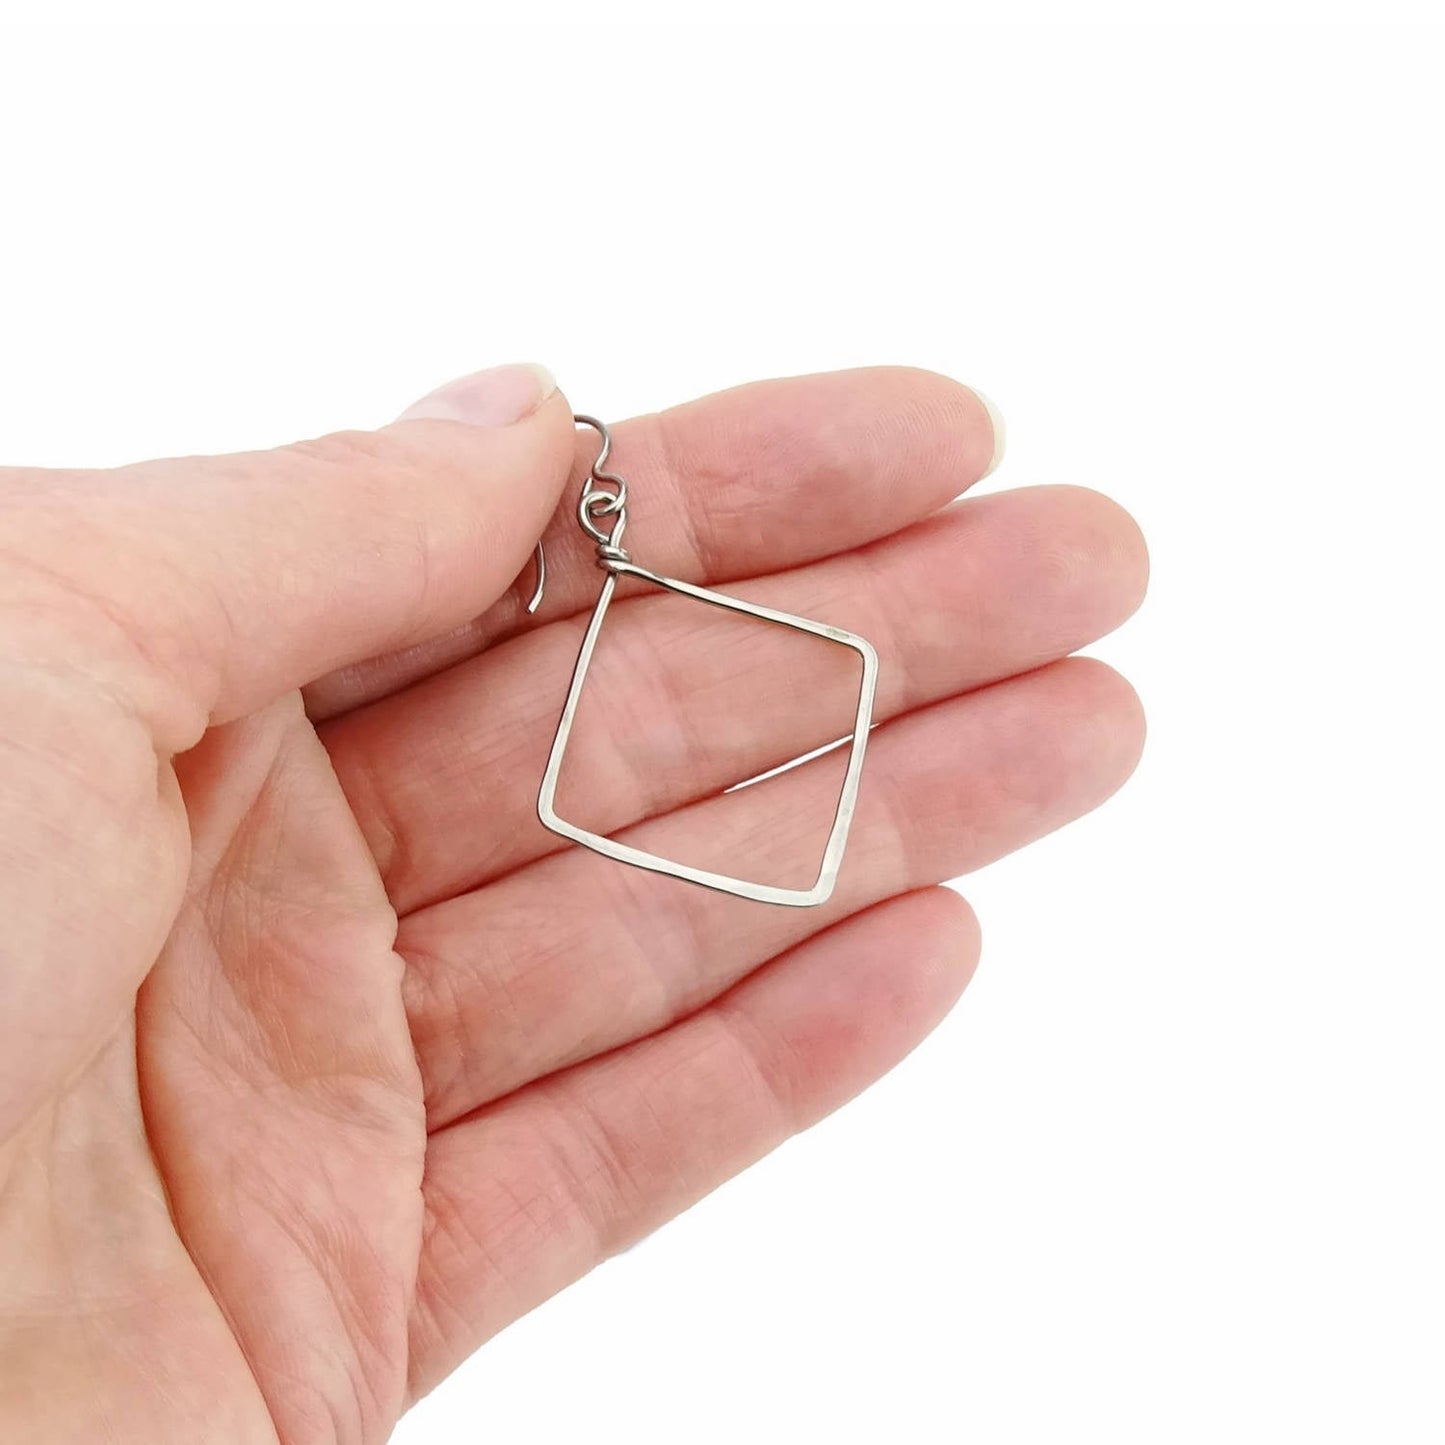 Niobium Square Earrings, Hammered Niobium Diamond Shaped Hypoallergenic Earrings for Sensitive Ears, Niobium or Titanium Earrings